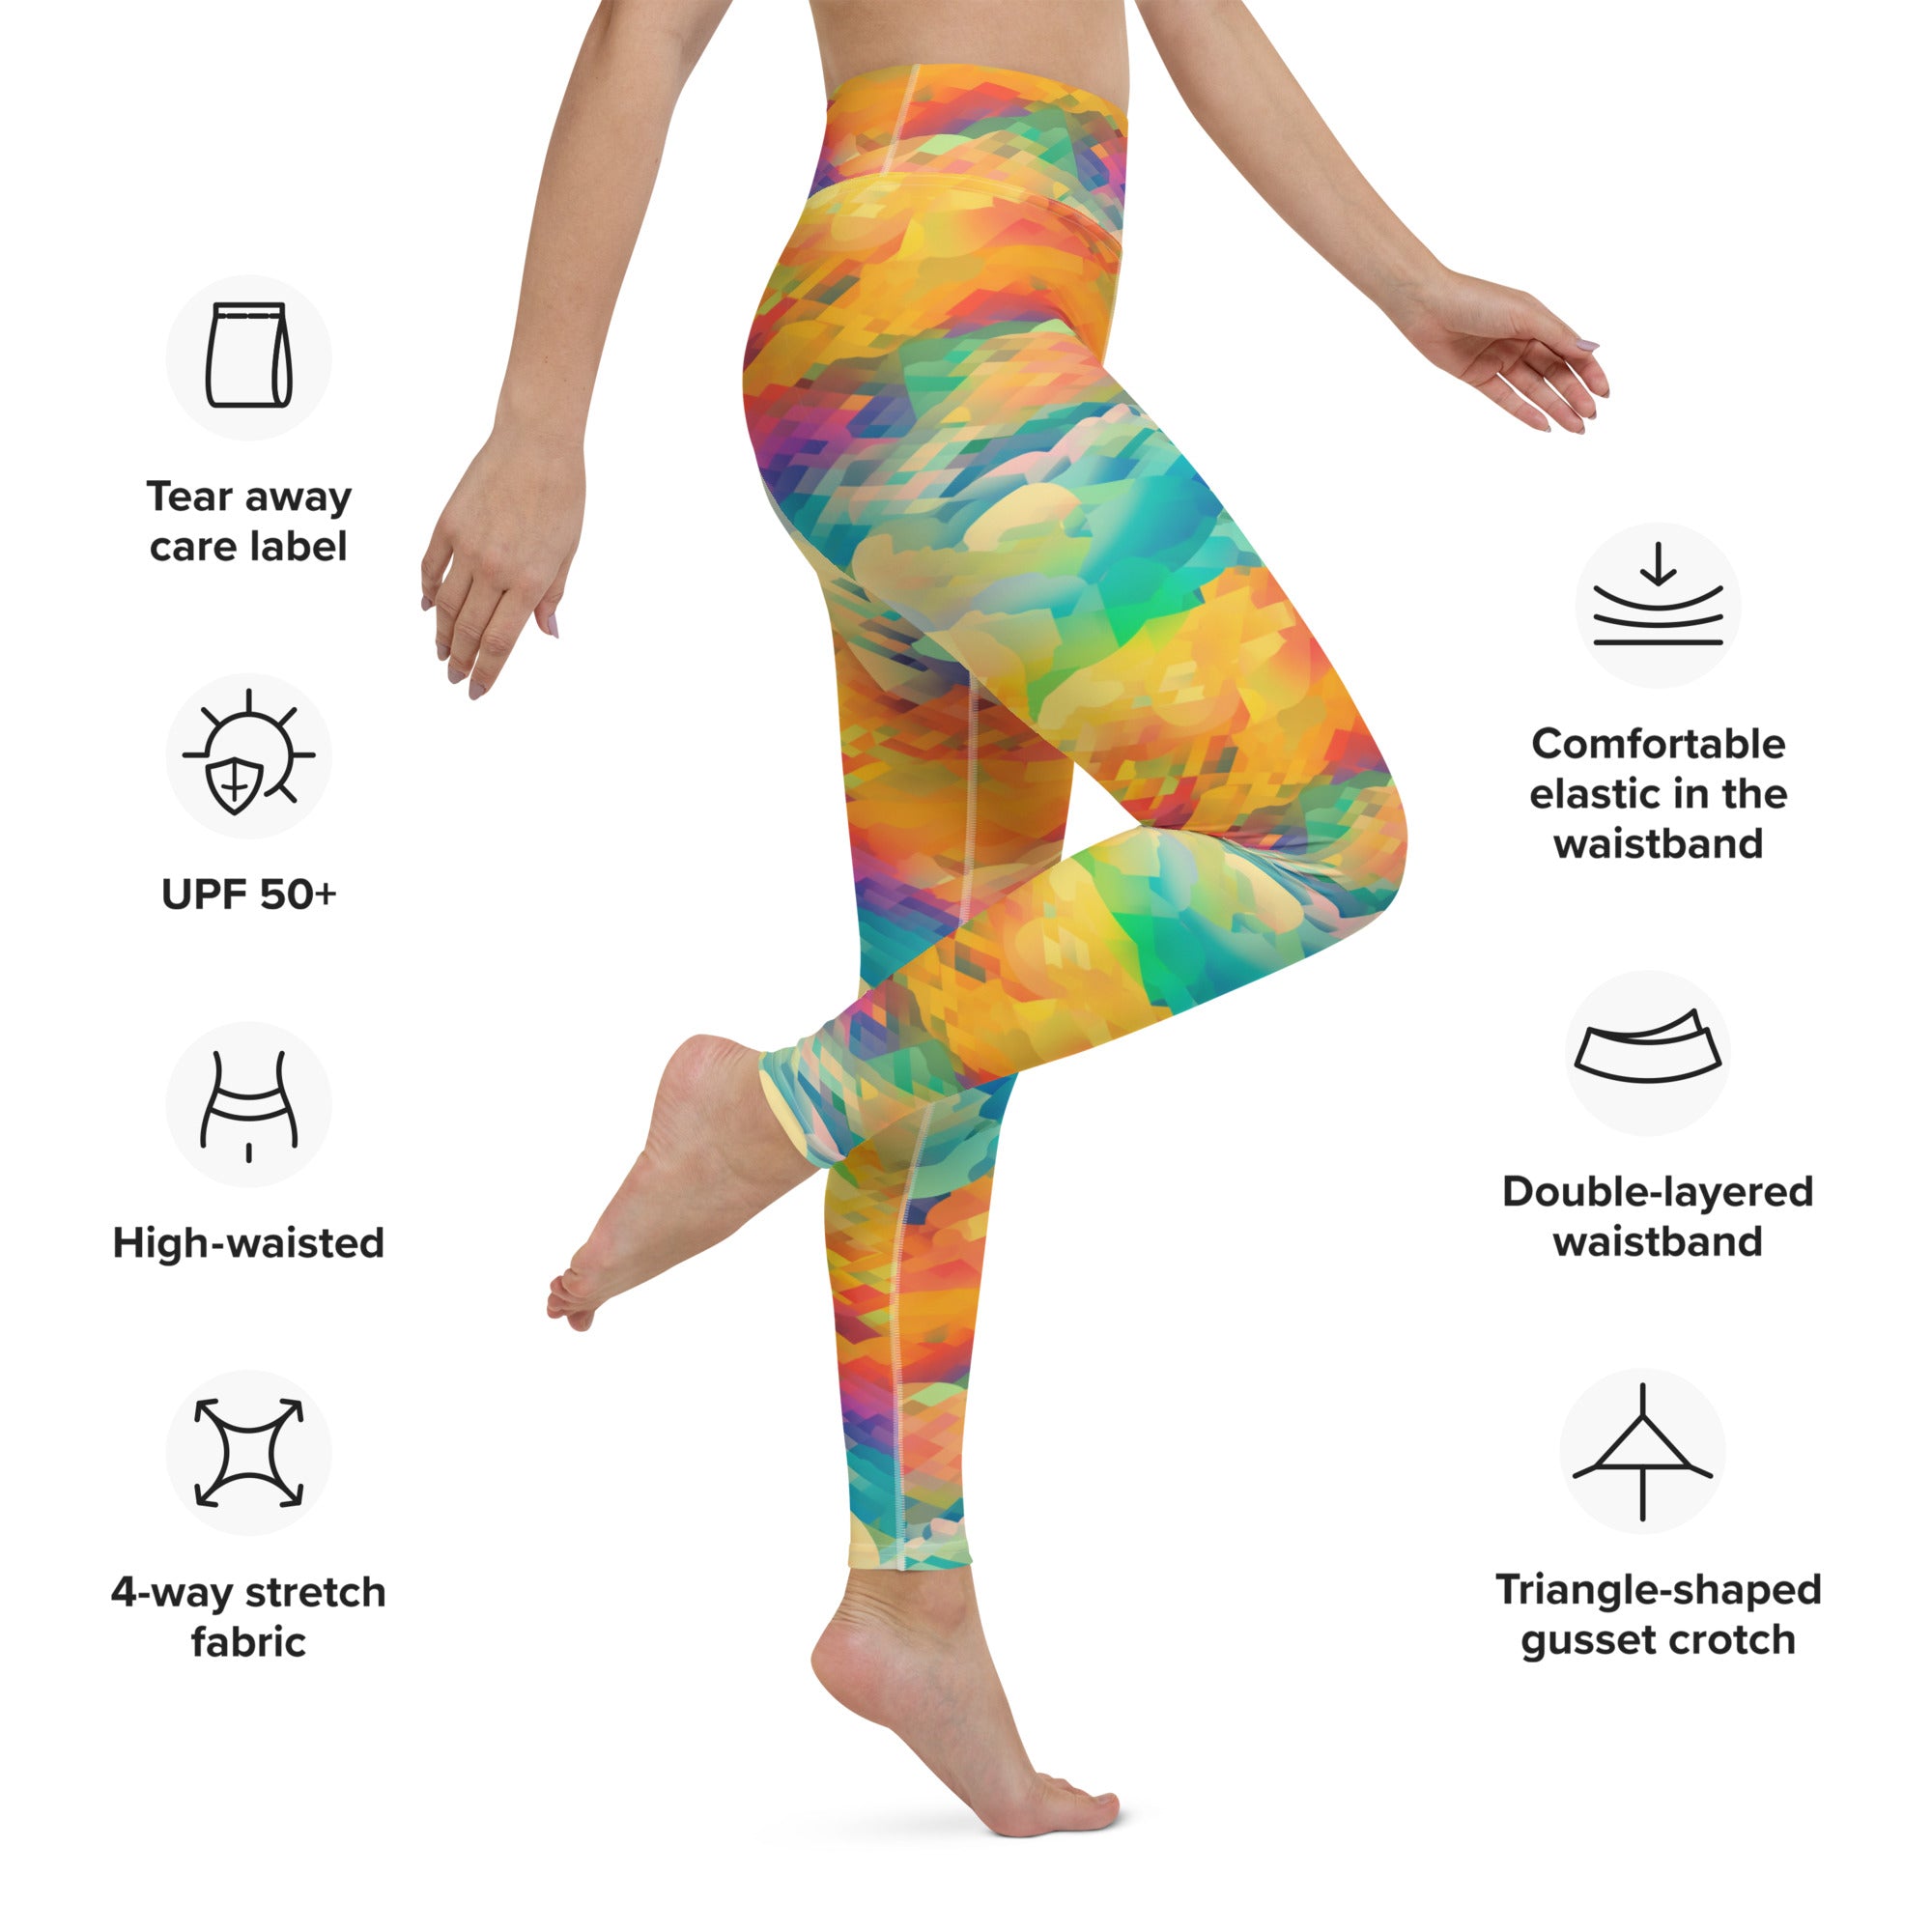 Yoga Leggings- Rainbow cloud 03